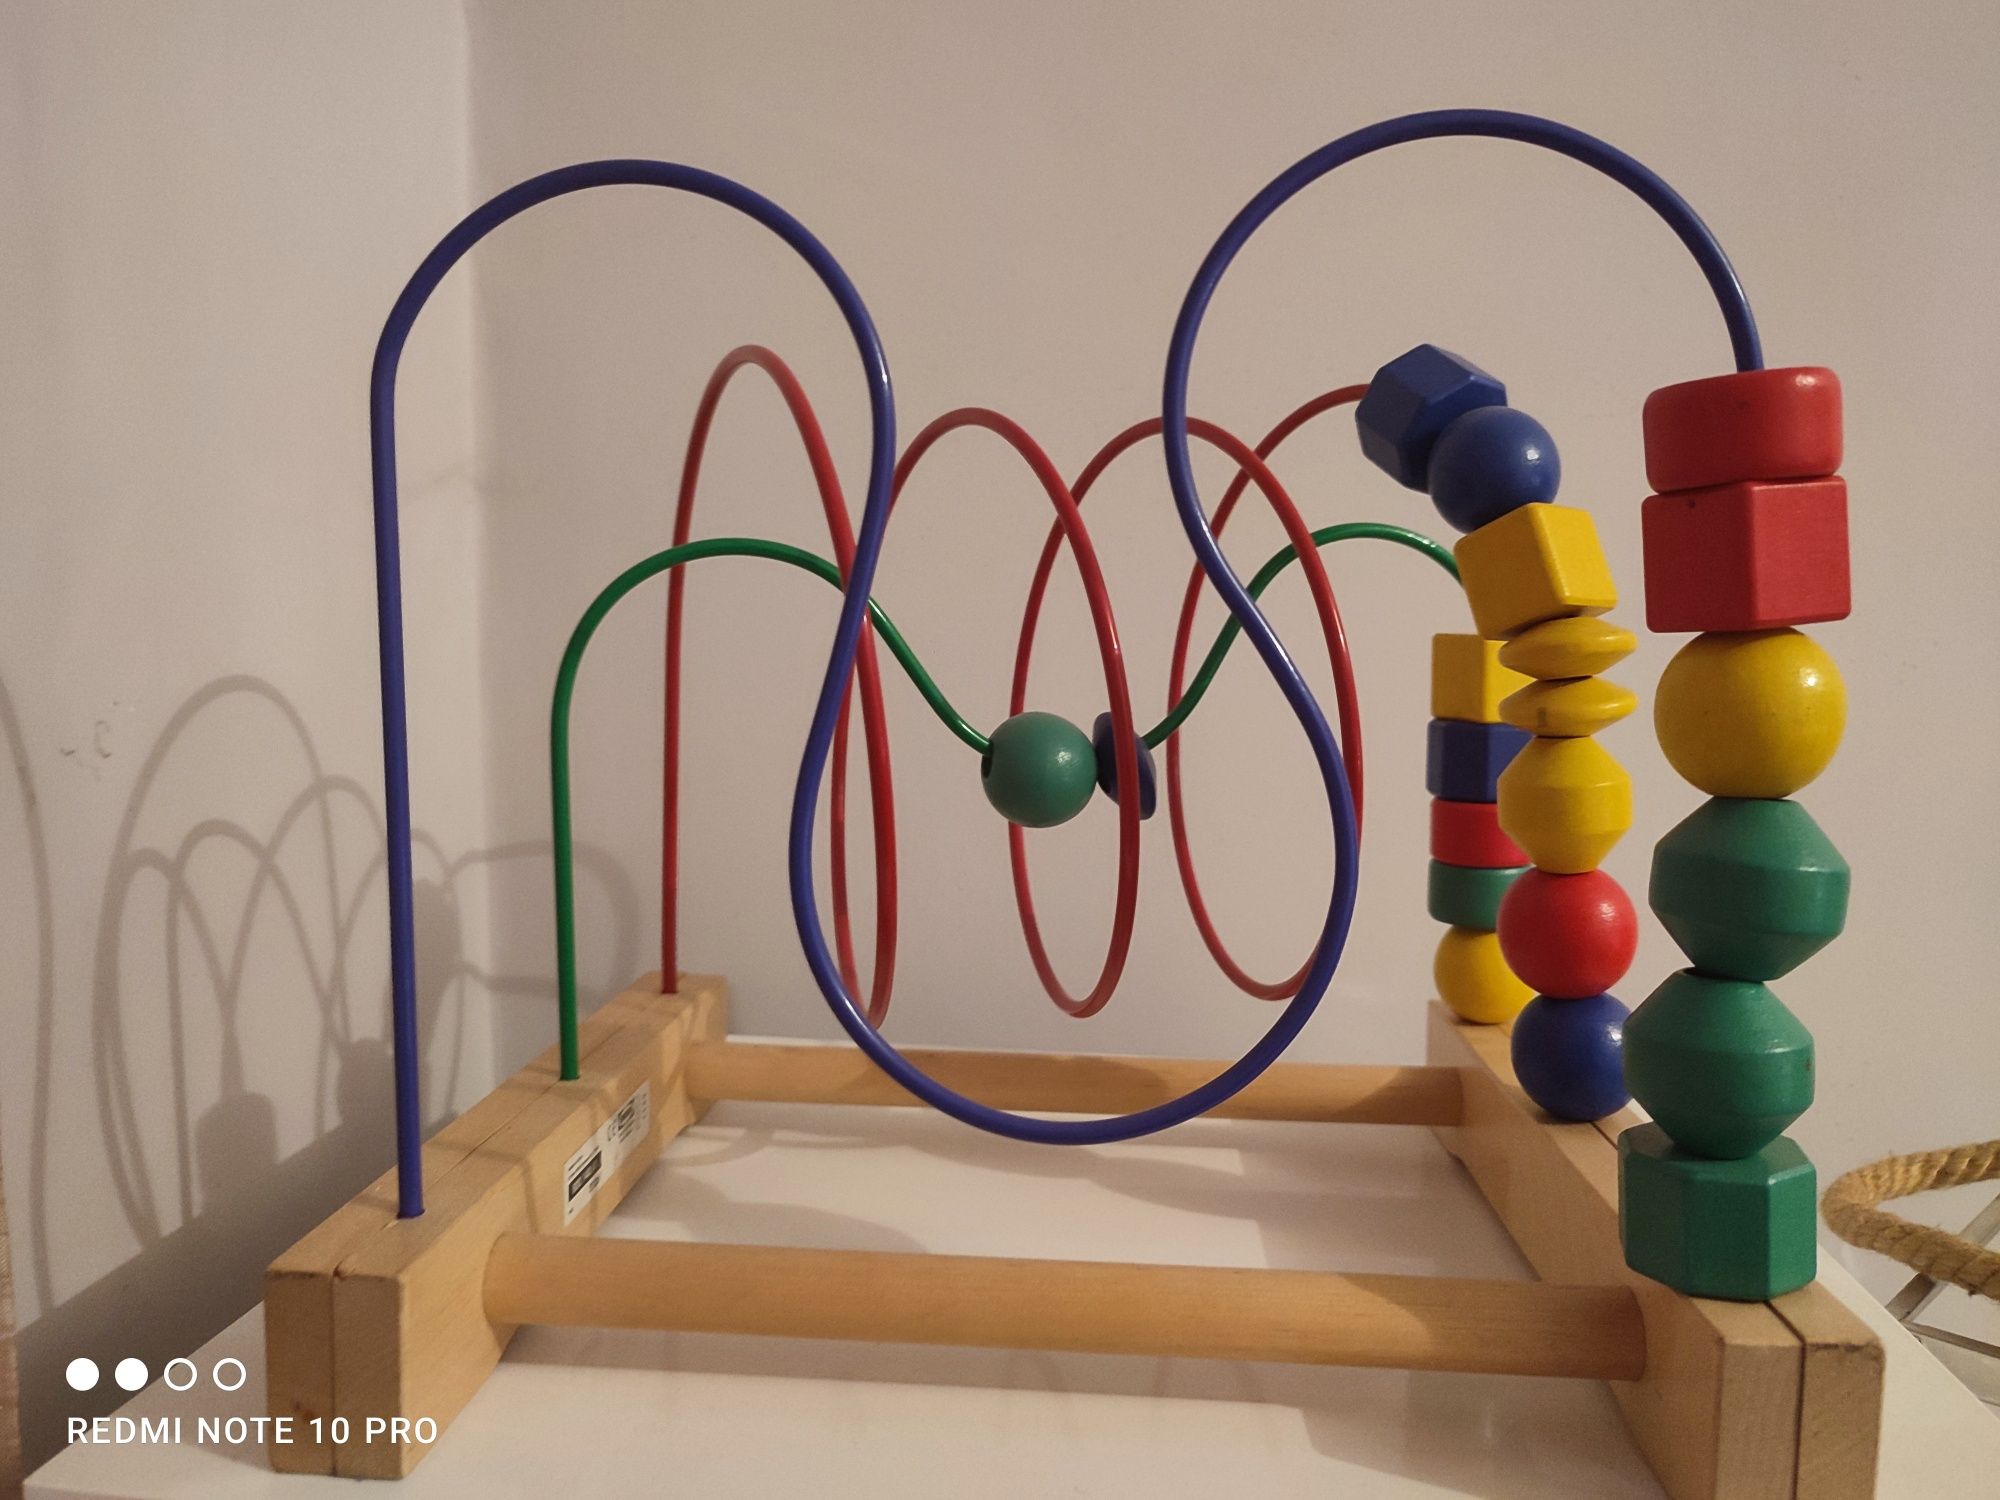 Zabawka dla dziecka Ikea Mula